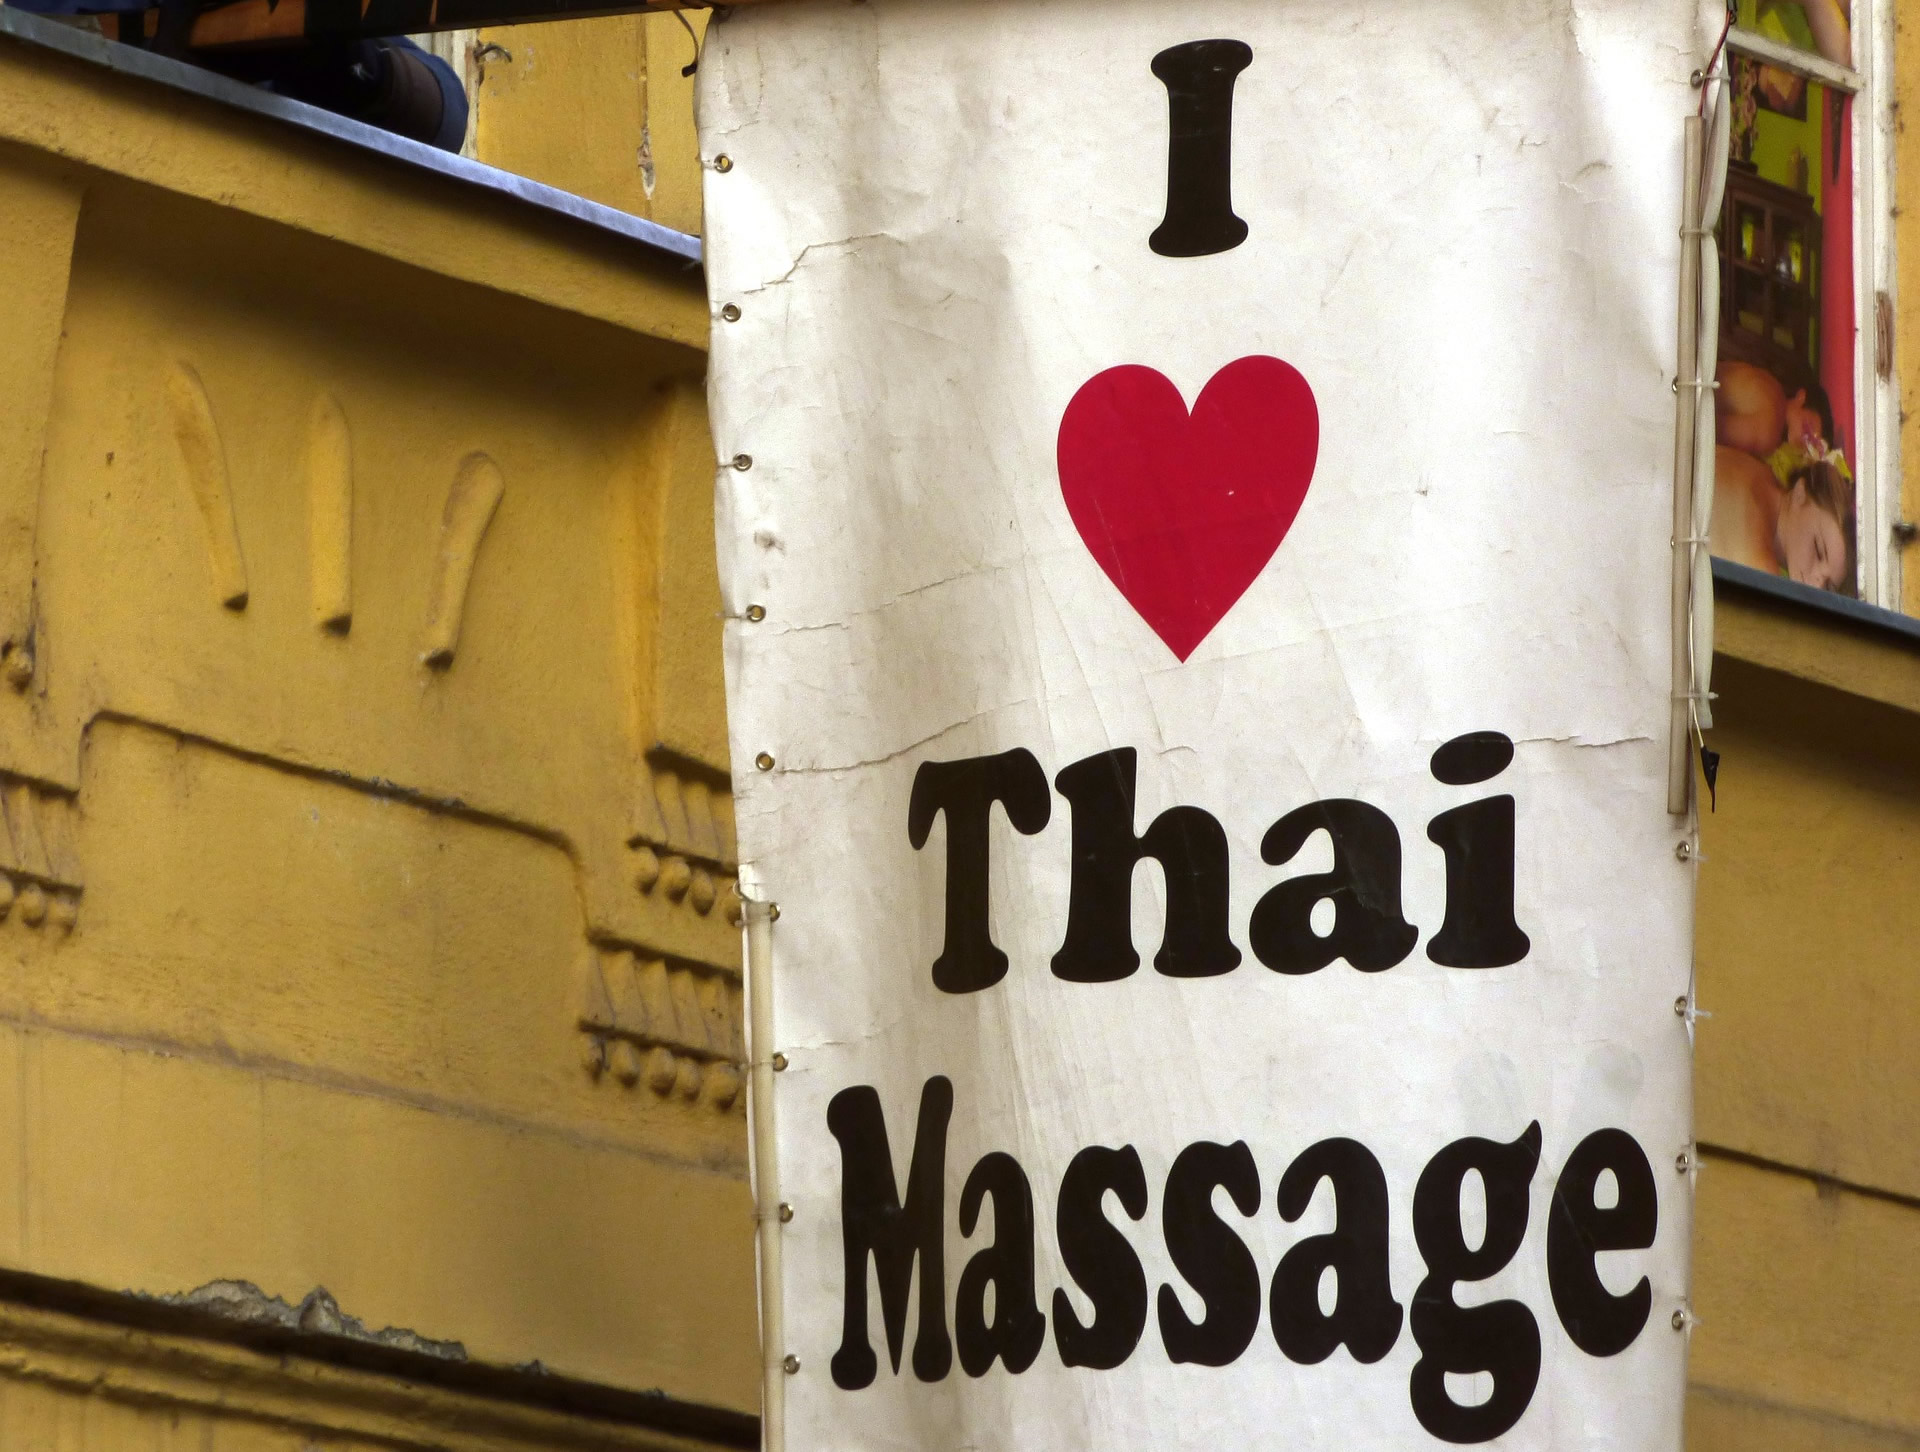 the history of thai massage